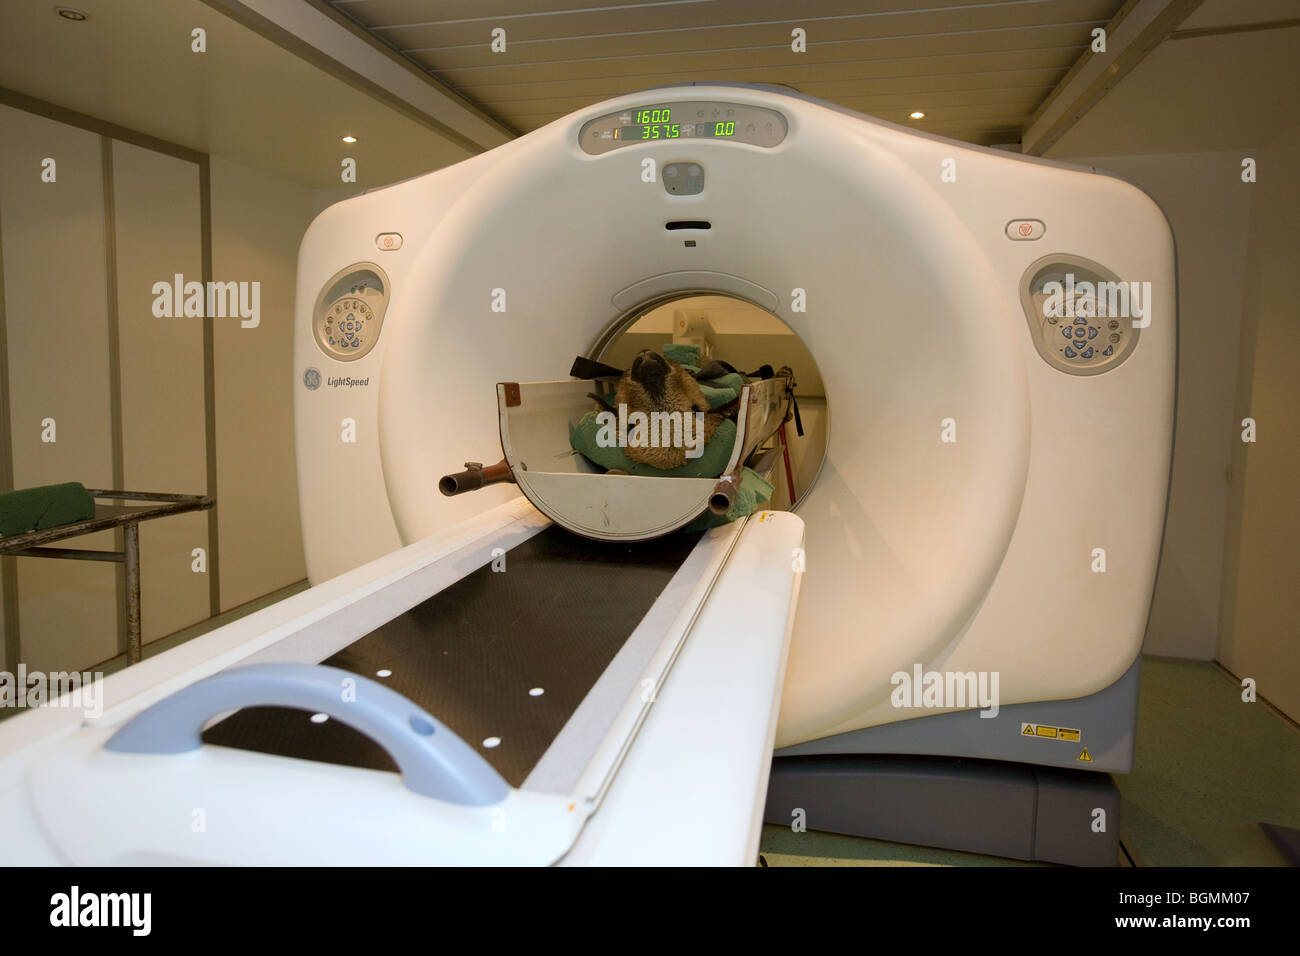 A sheep in a MRI Scanner Stock Photo